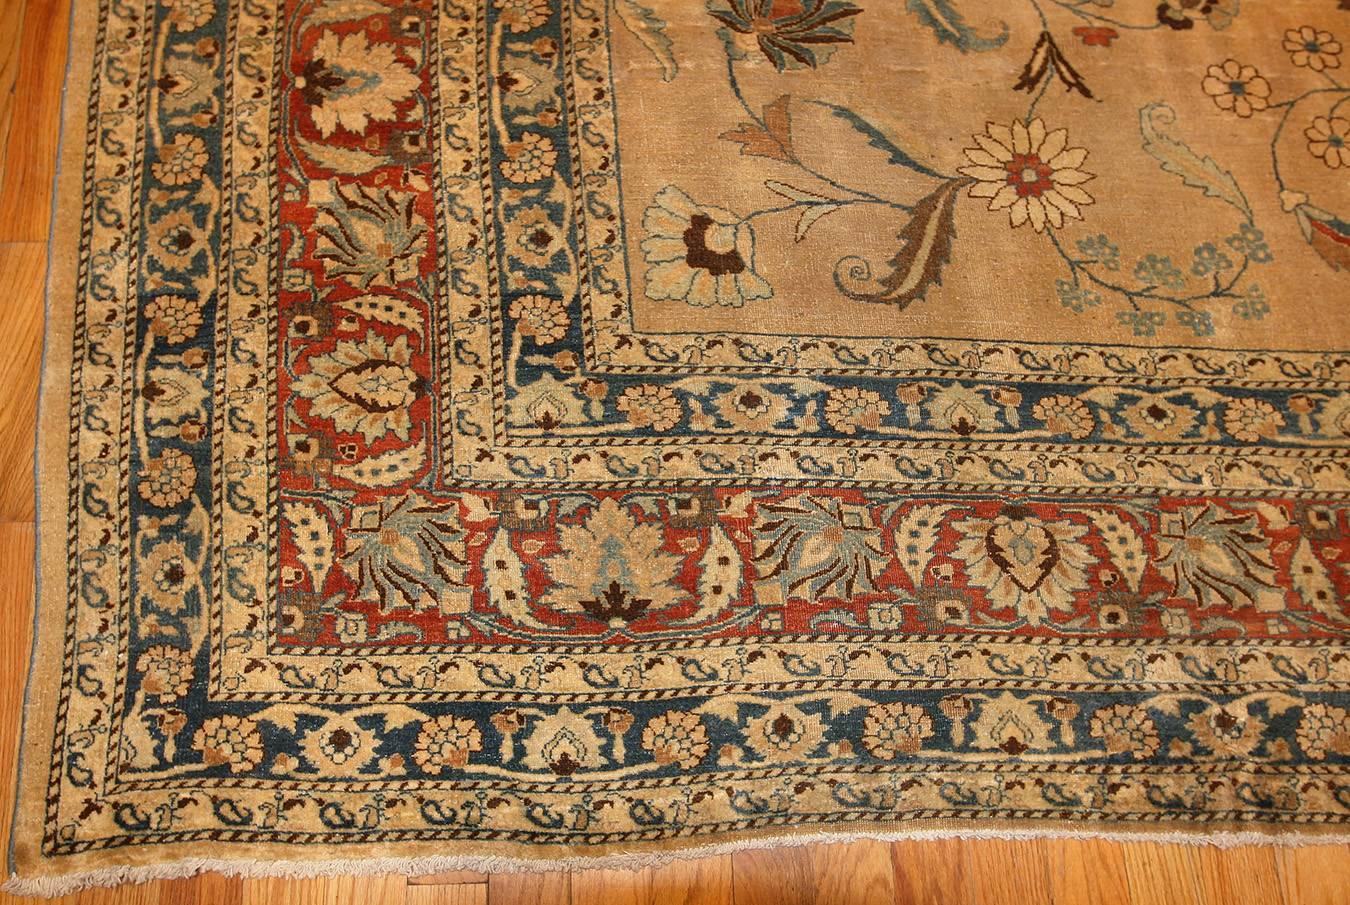 Antique Persian Khorassan carpet, country of origin: Persia, date circa 1920. Size: 13 ft. 2 in x 18 ft. 8 in (4.01 m x 5.69 m). 